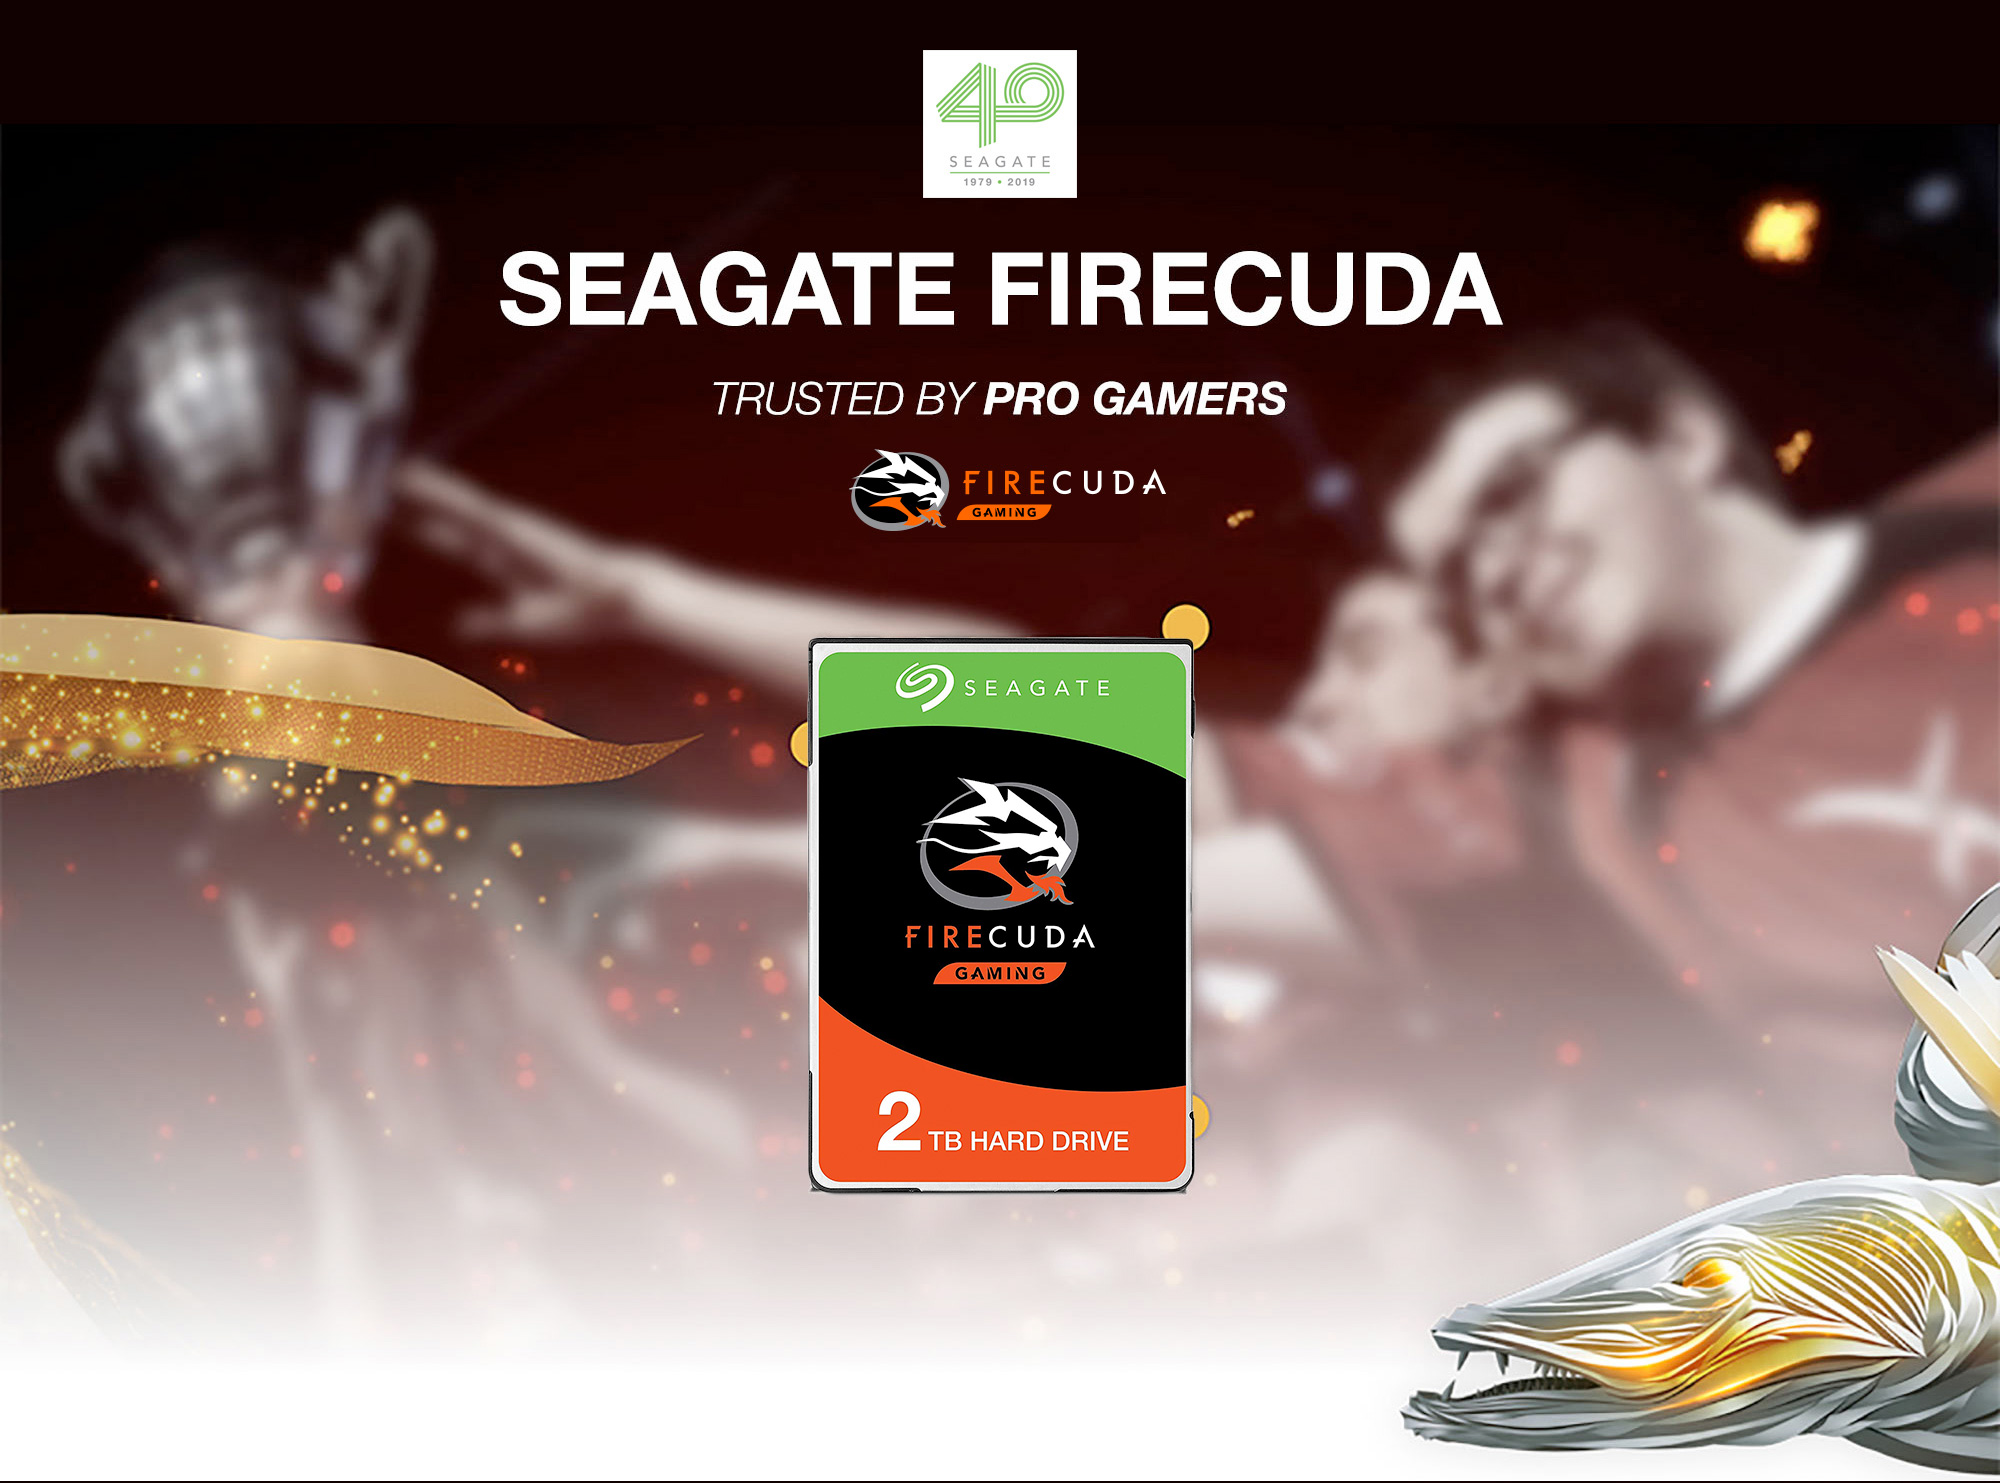 Seagate Firecuda